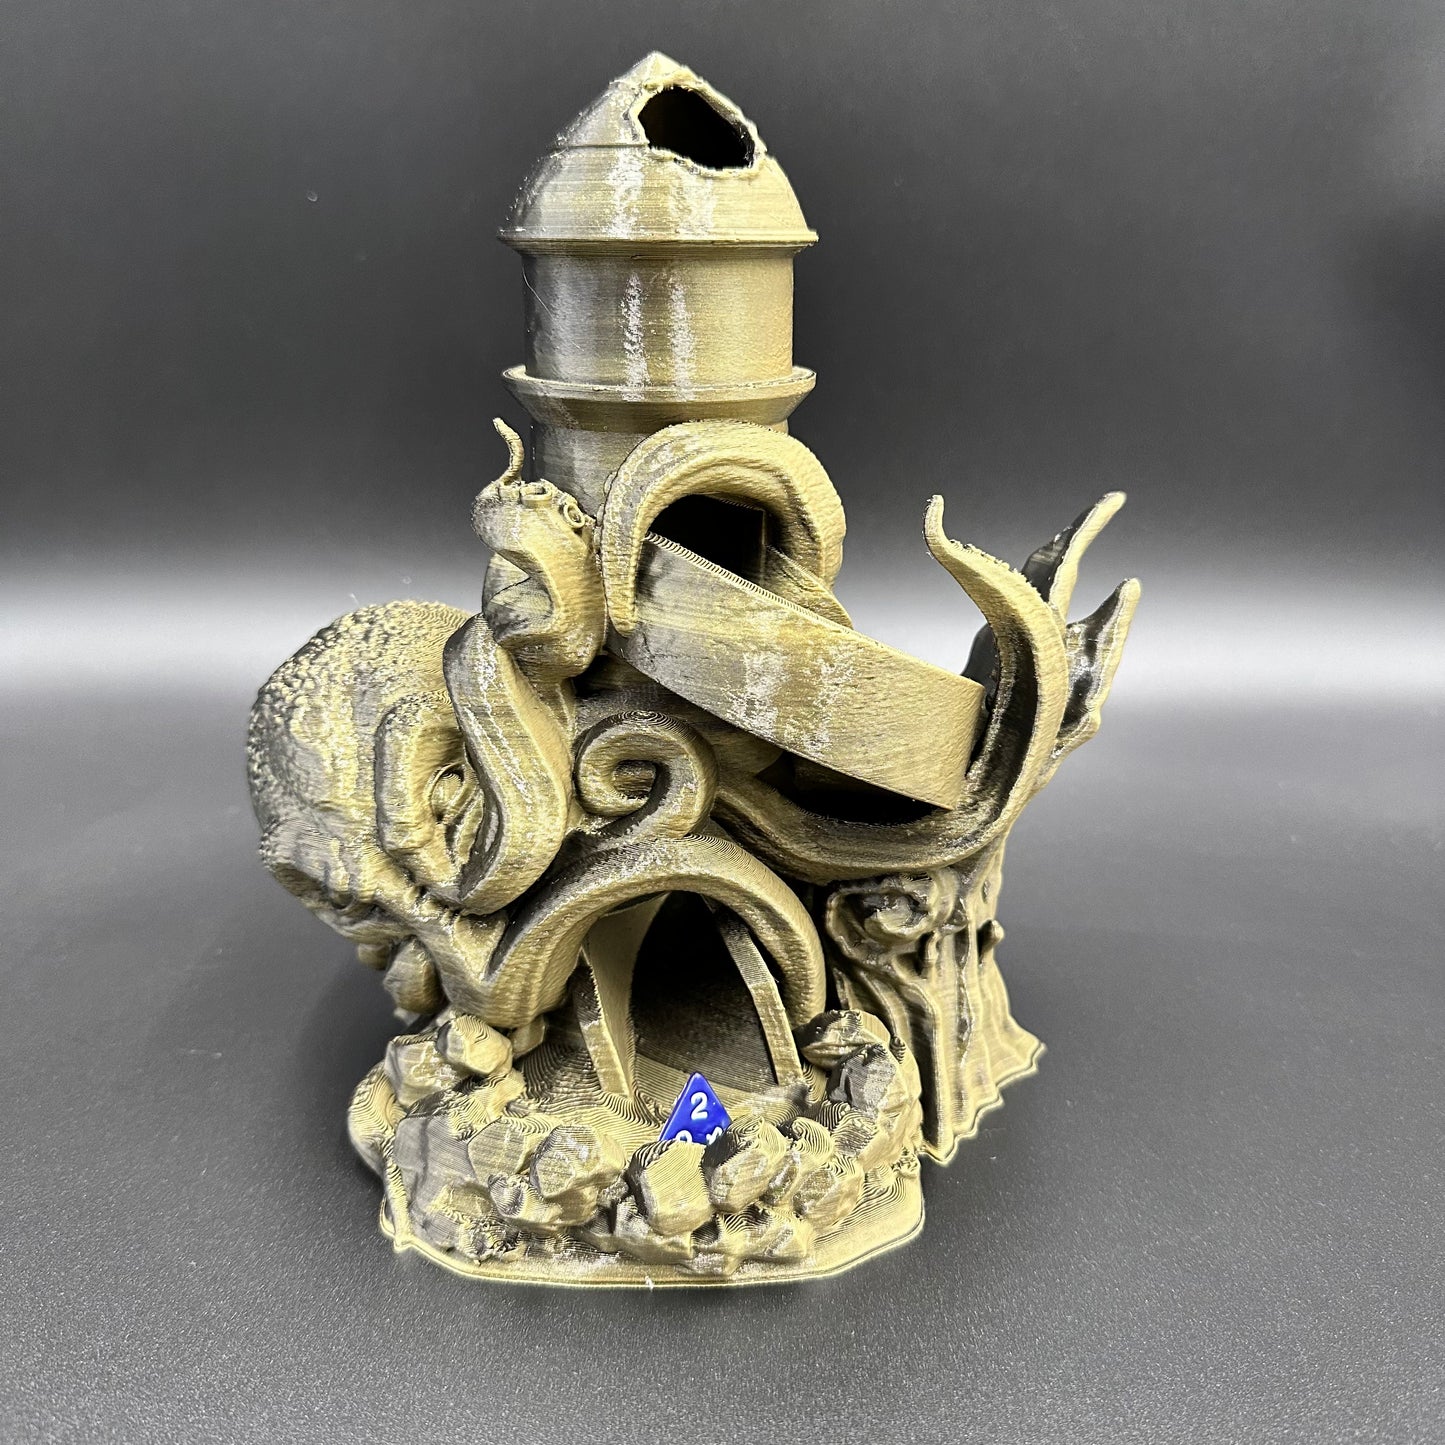 3D Printed Dice Tower